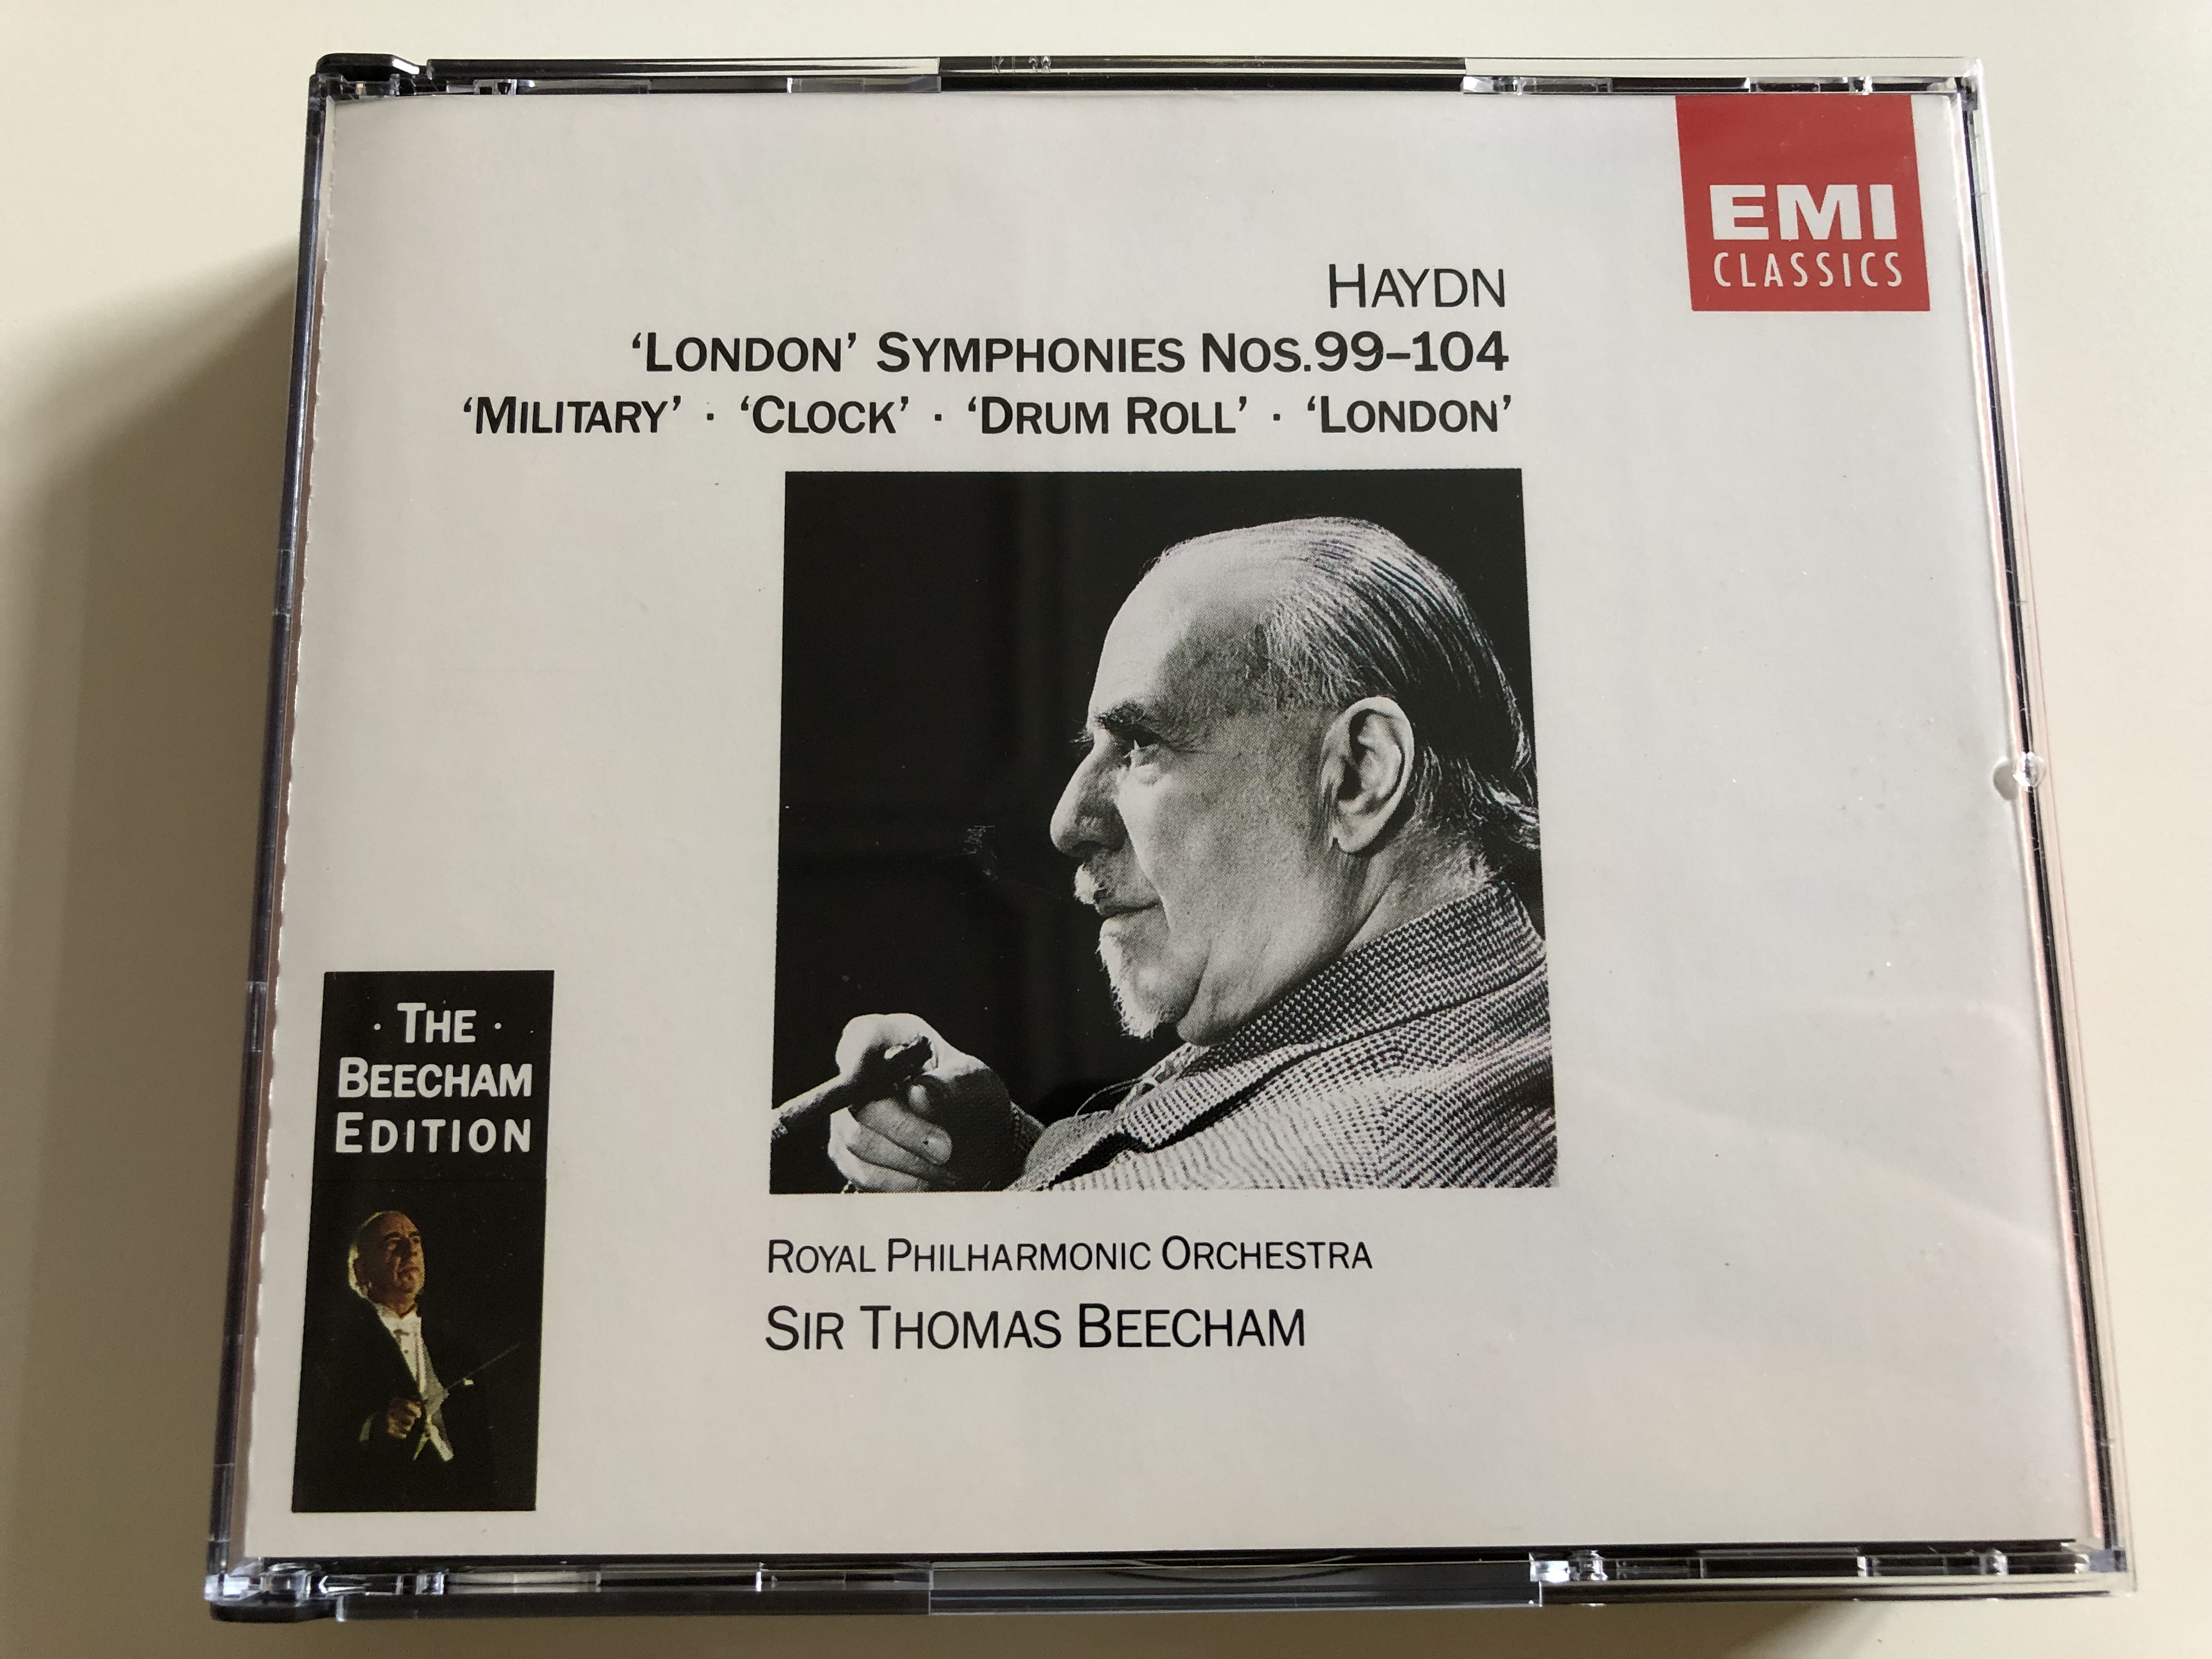 haydn-london-symphonies-nos.-99-104-military-clock-drum-roll-london-royal-philharmonic-orchestra-conducted-by-sir-thomas-beecham-audio-cd-1992-emi-classics-2-cd-1-.jpg